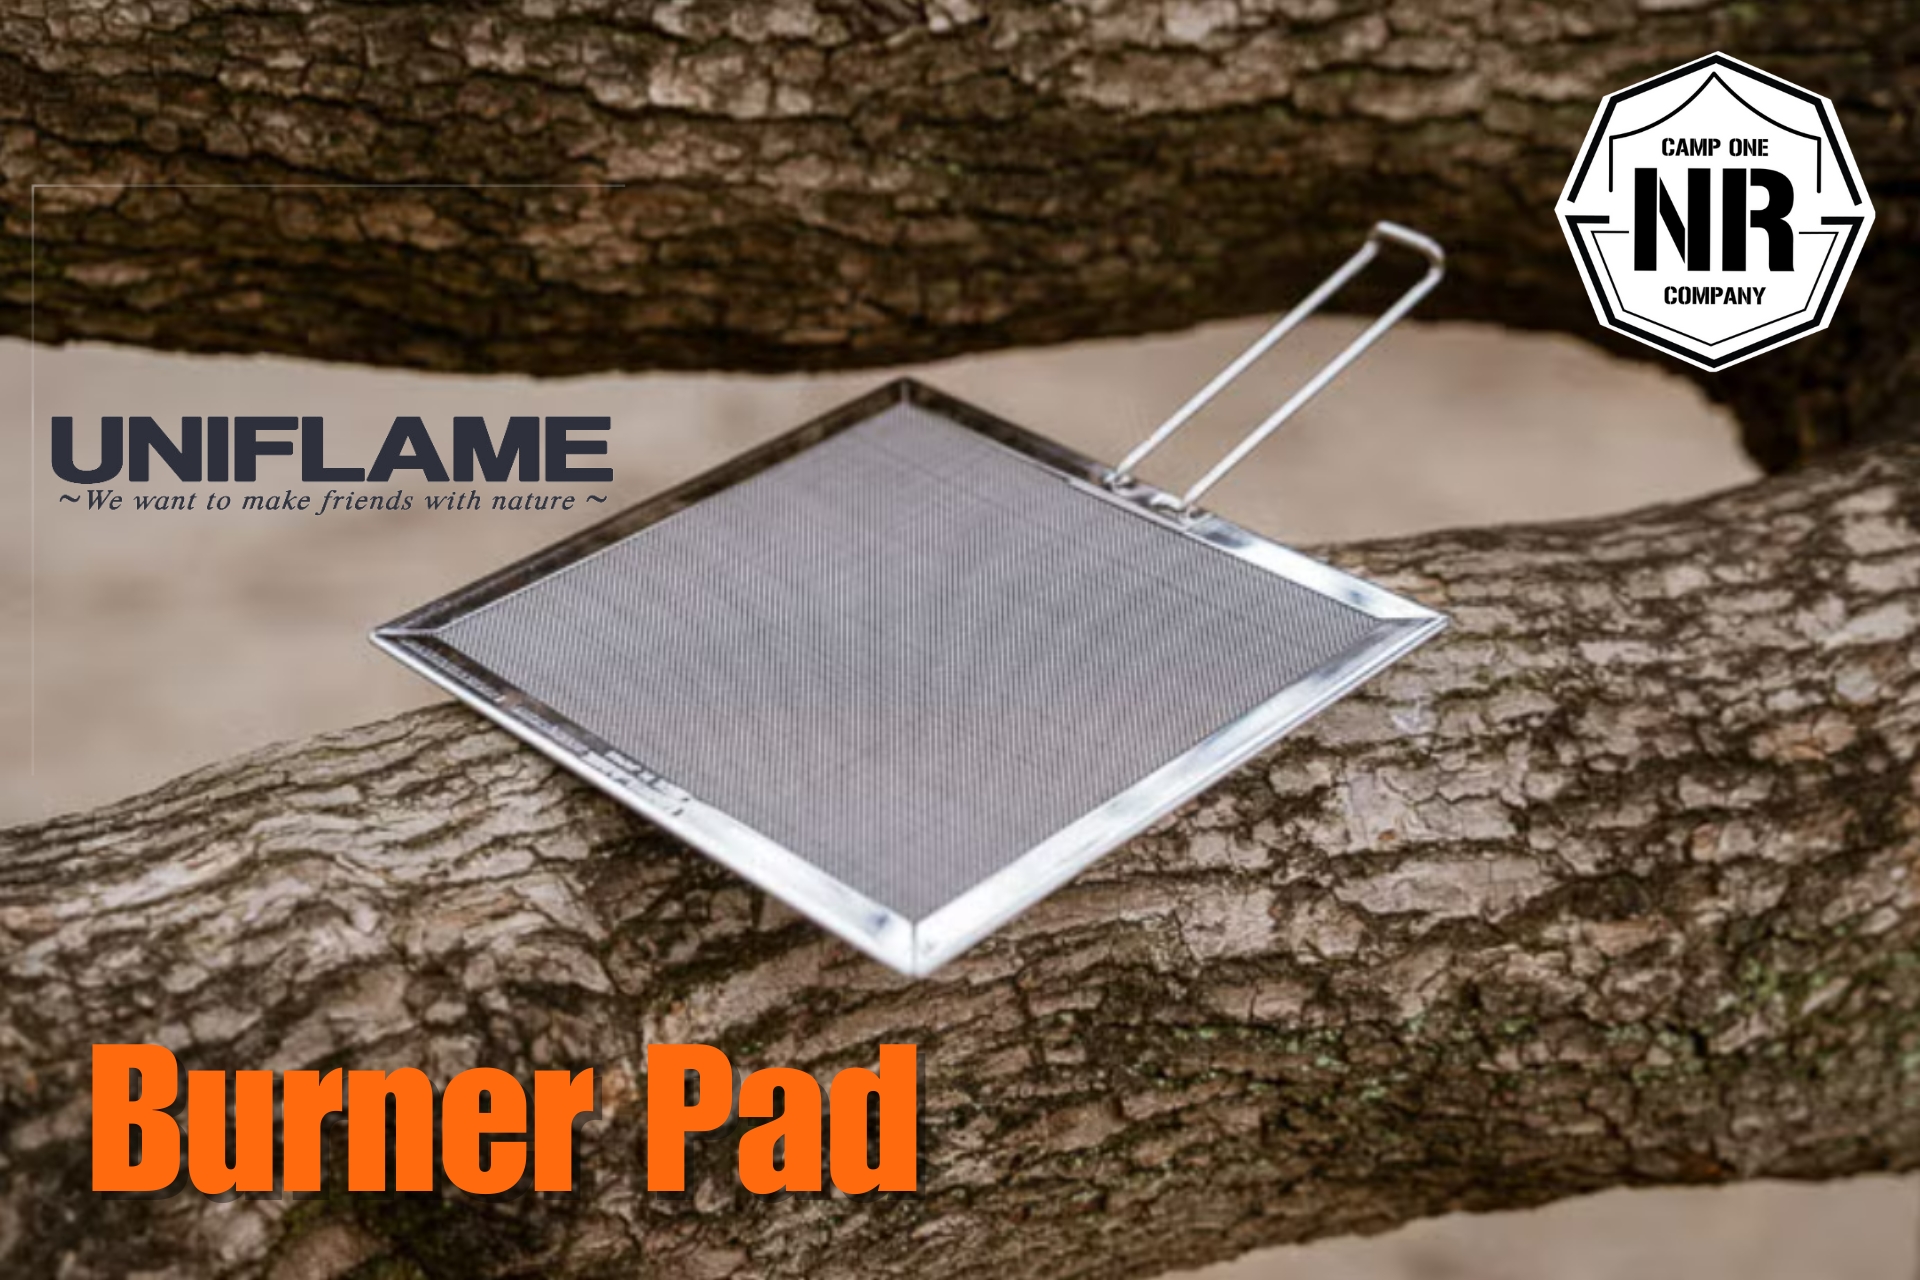 Uniflame “Burner Pad” อุปกรณ์ที่เรียบง่าย แต่มีประโยชน์มากมาย